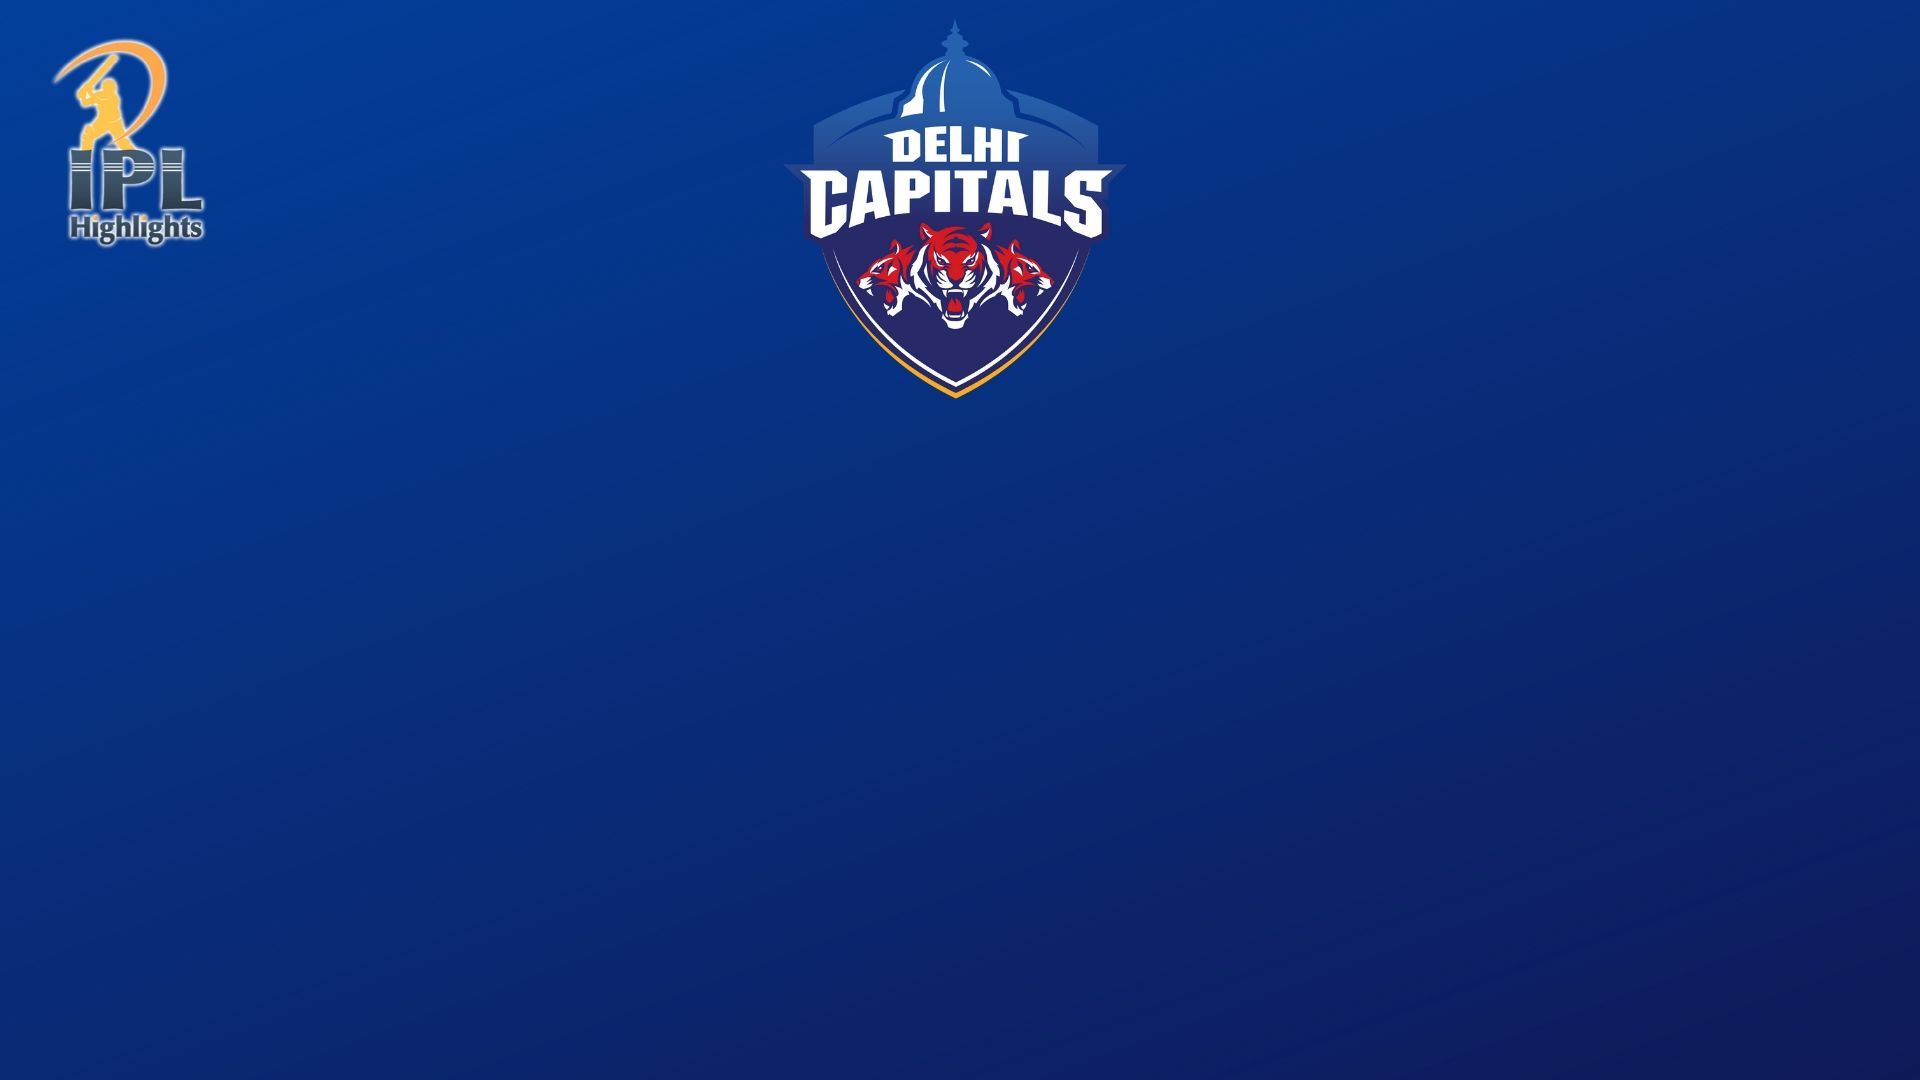 Capitals Background